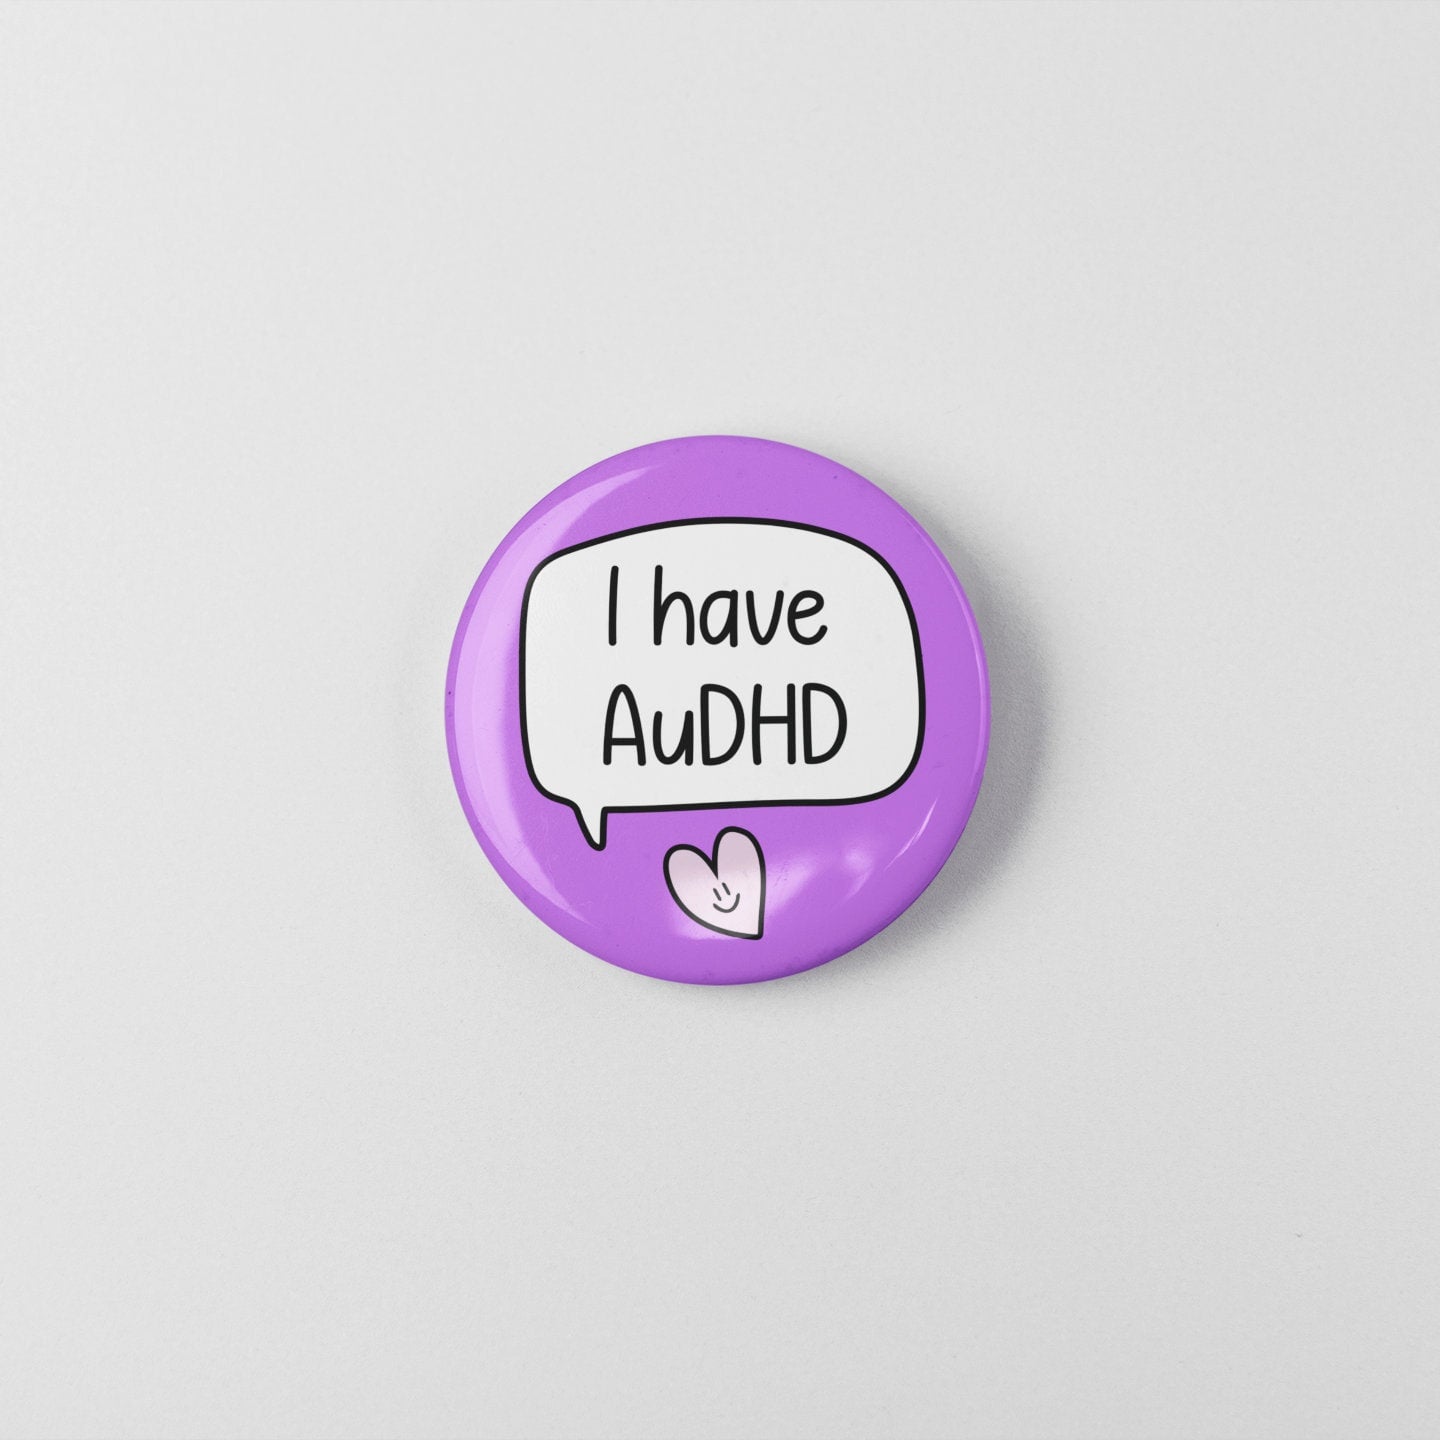 I have AuDHD - Badge Pin | Neurodivergent Badge - ADHD - Autism Badge